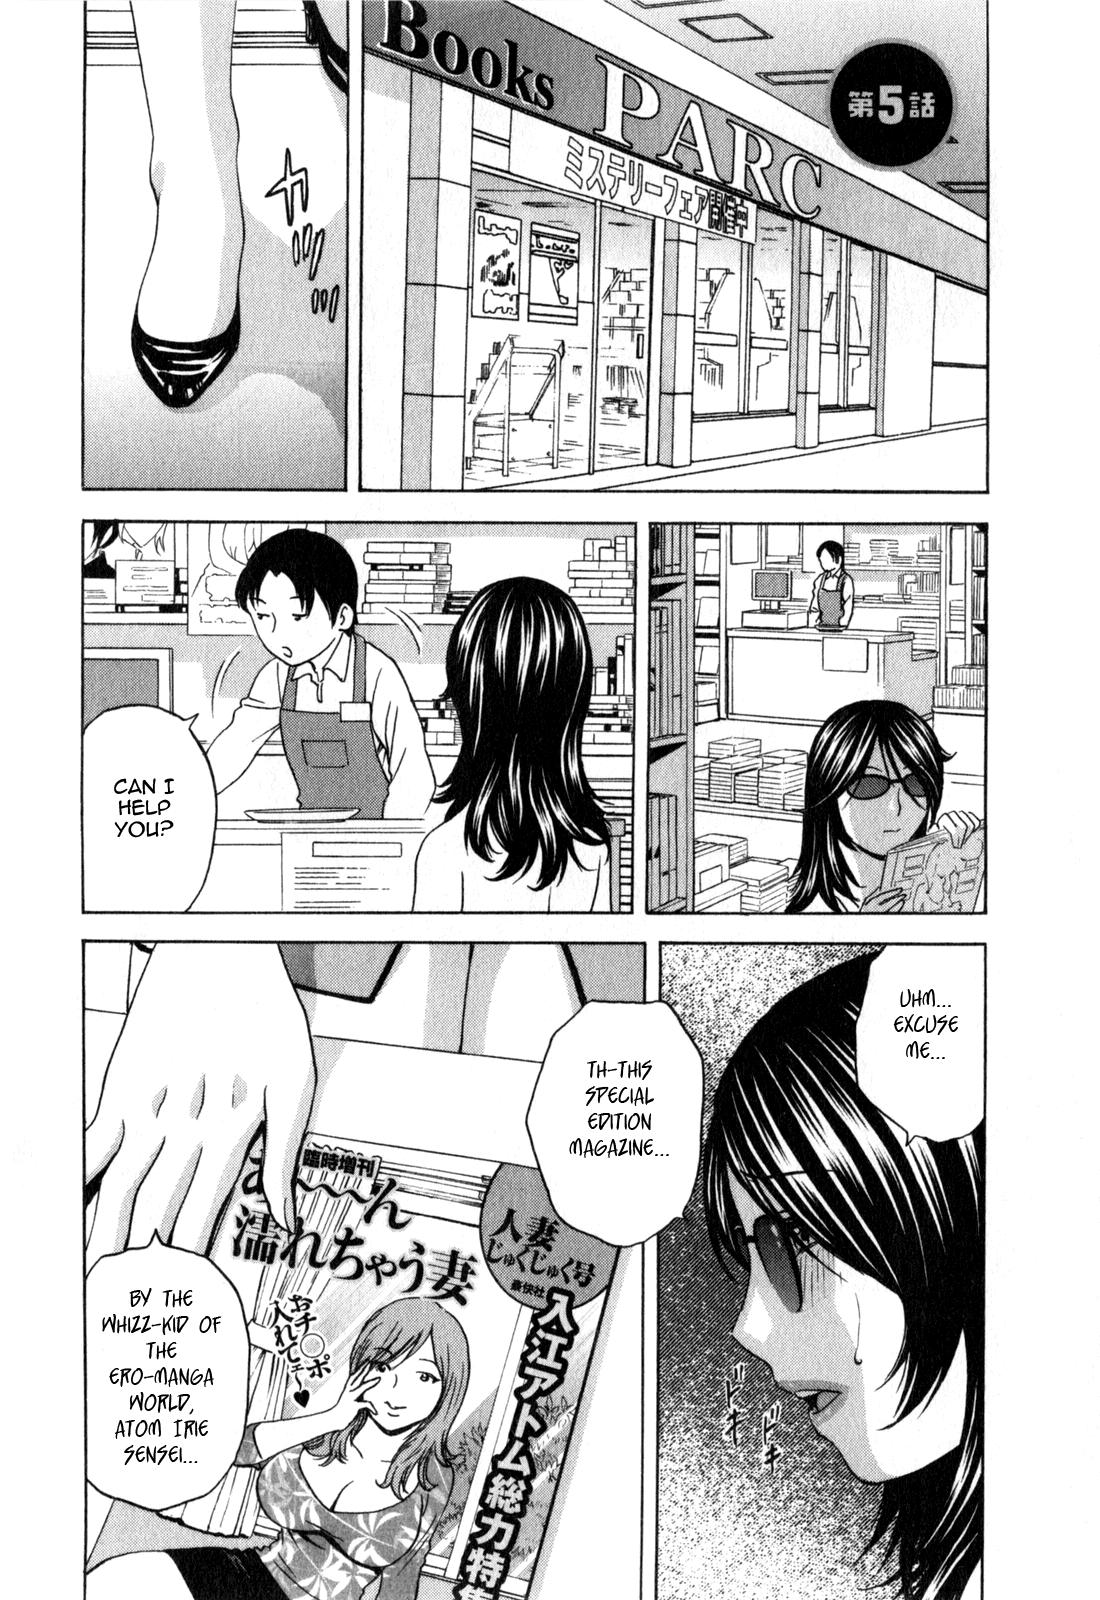 [Hidemaru] Life with Married Women Just Like a Manga 3 - Ch. 1-5 [English] {Tadanohito} 86